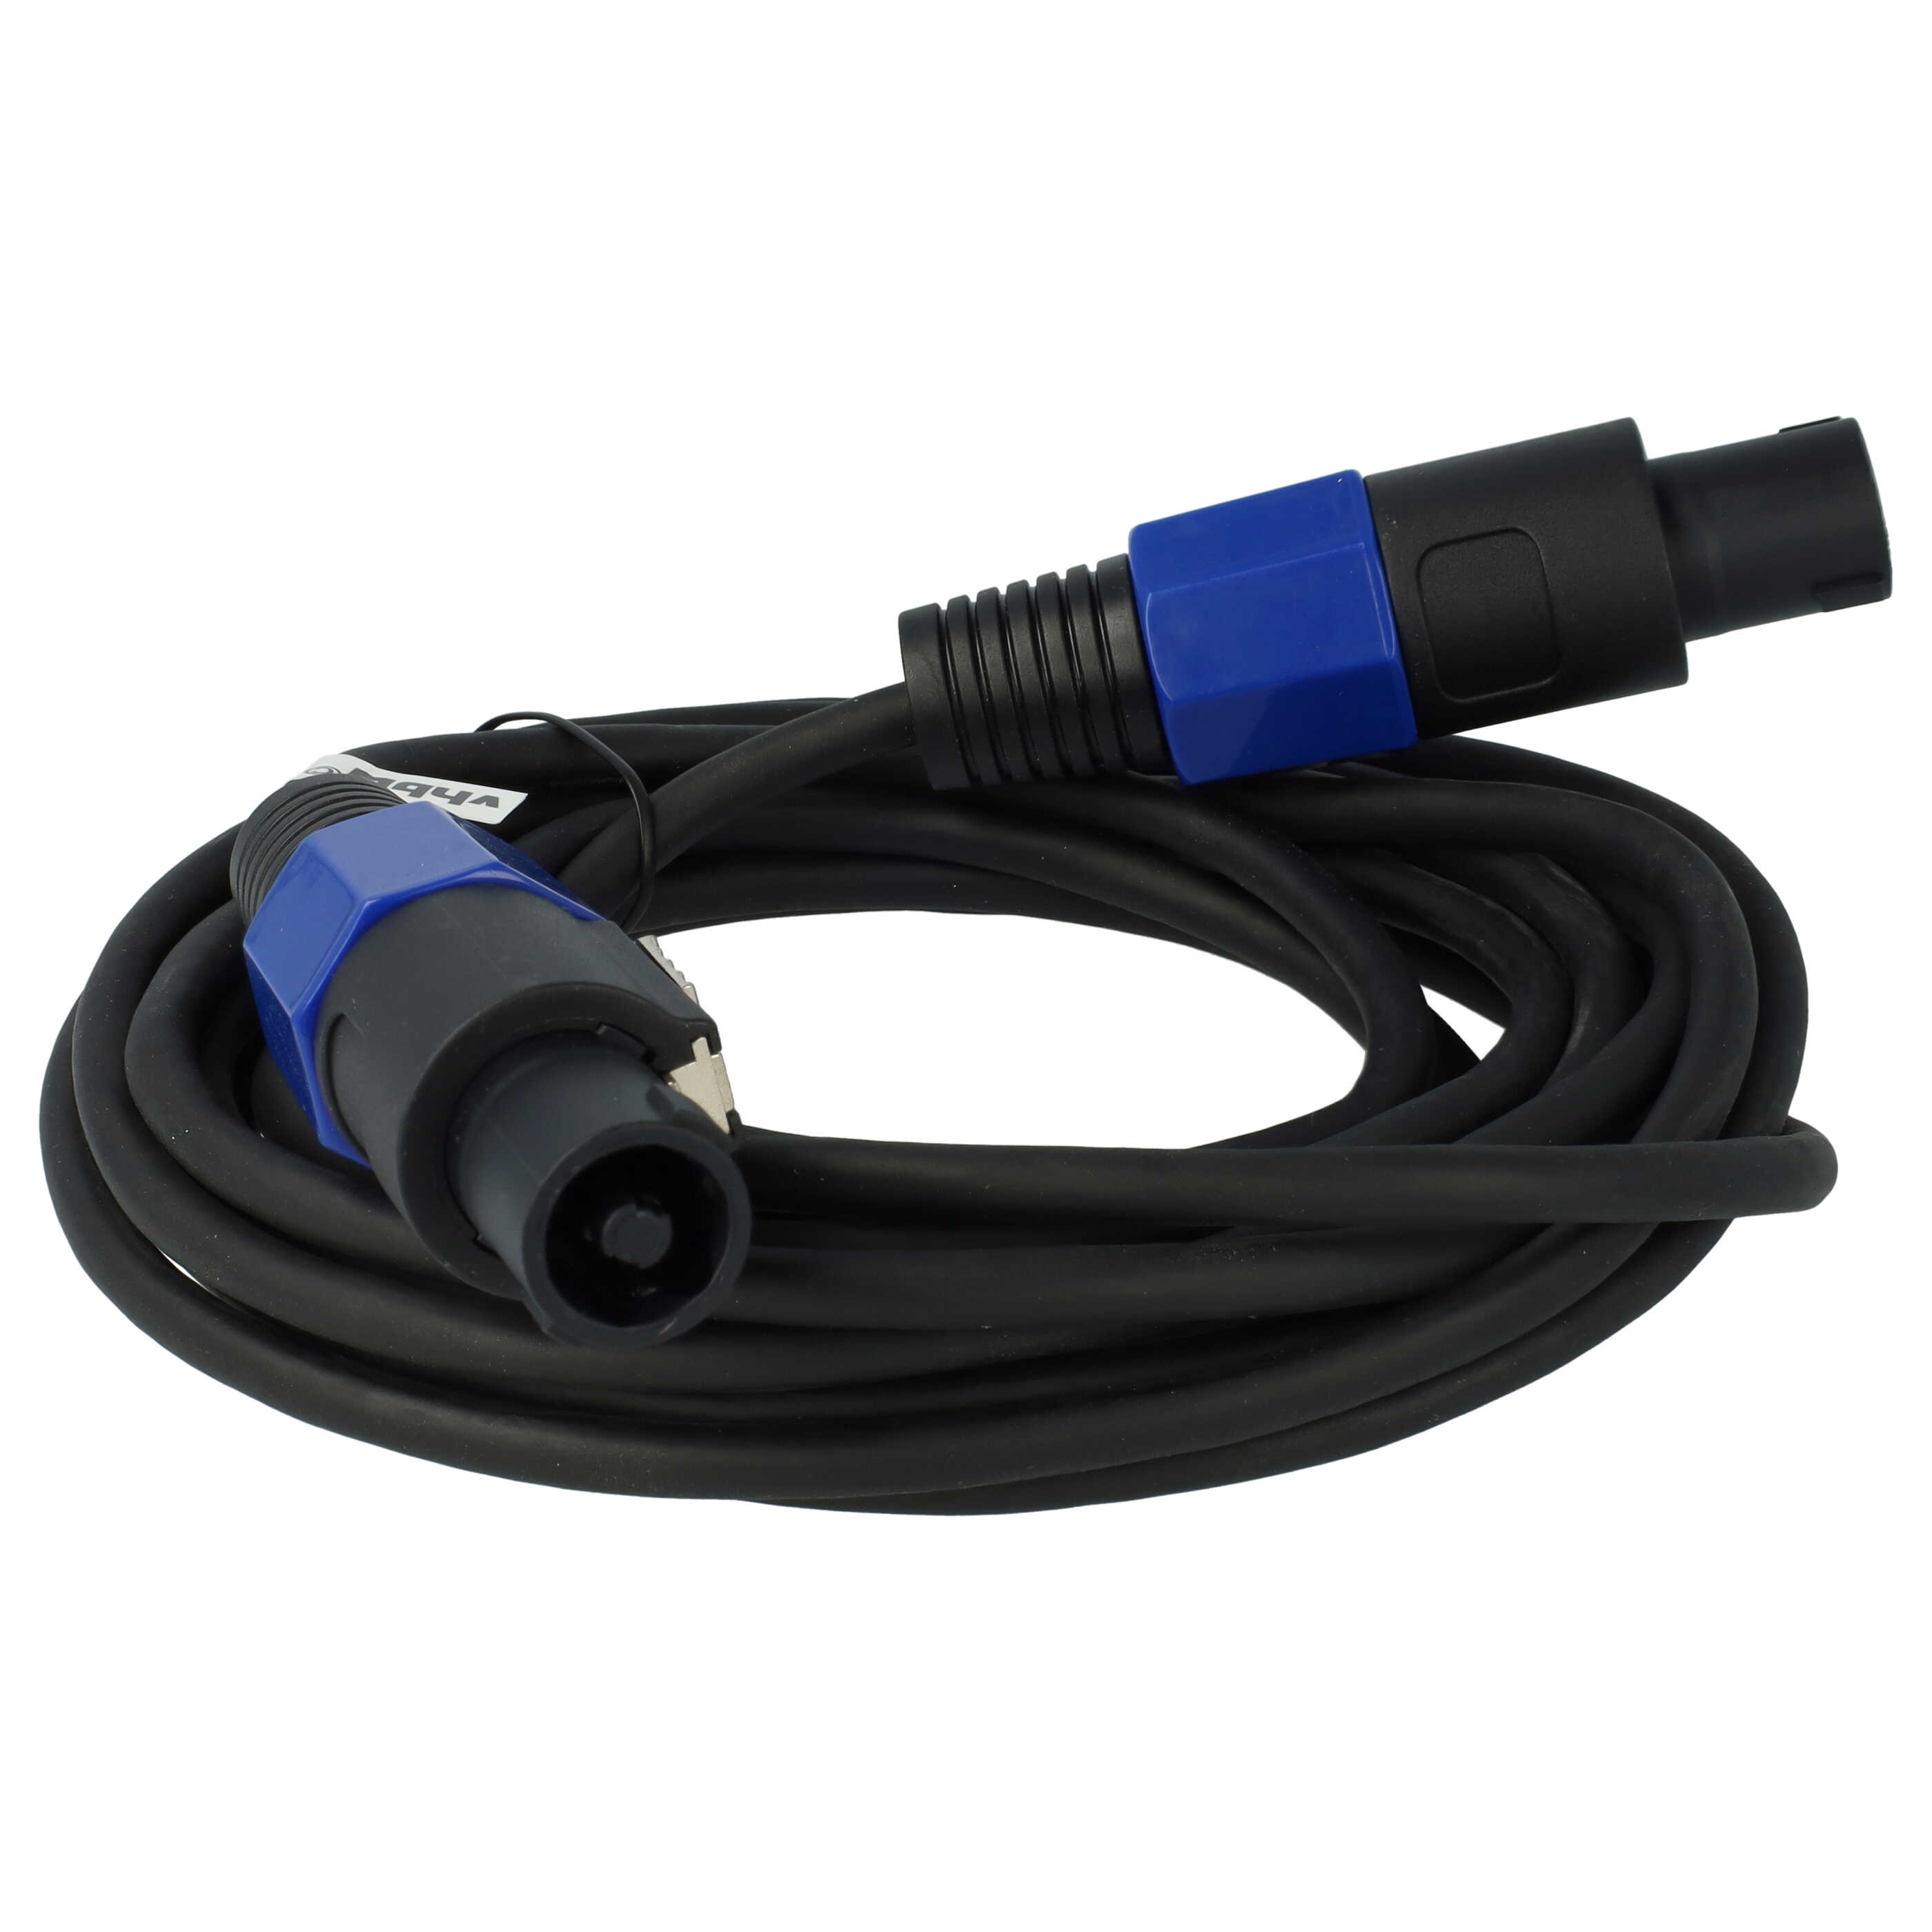 vhbw PA Connection Cable - Audio Cable, 5 m Black